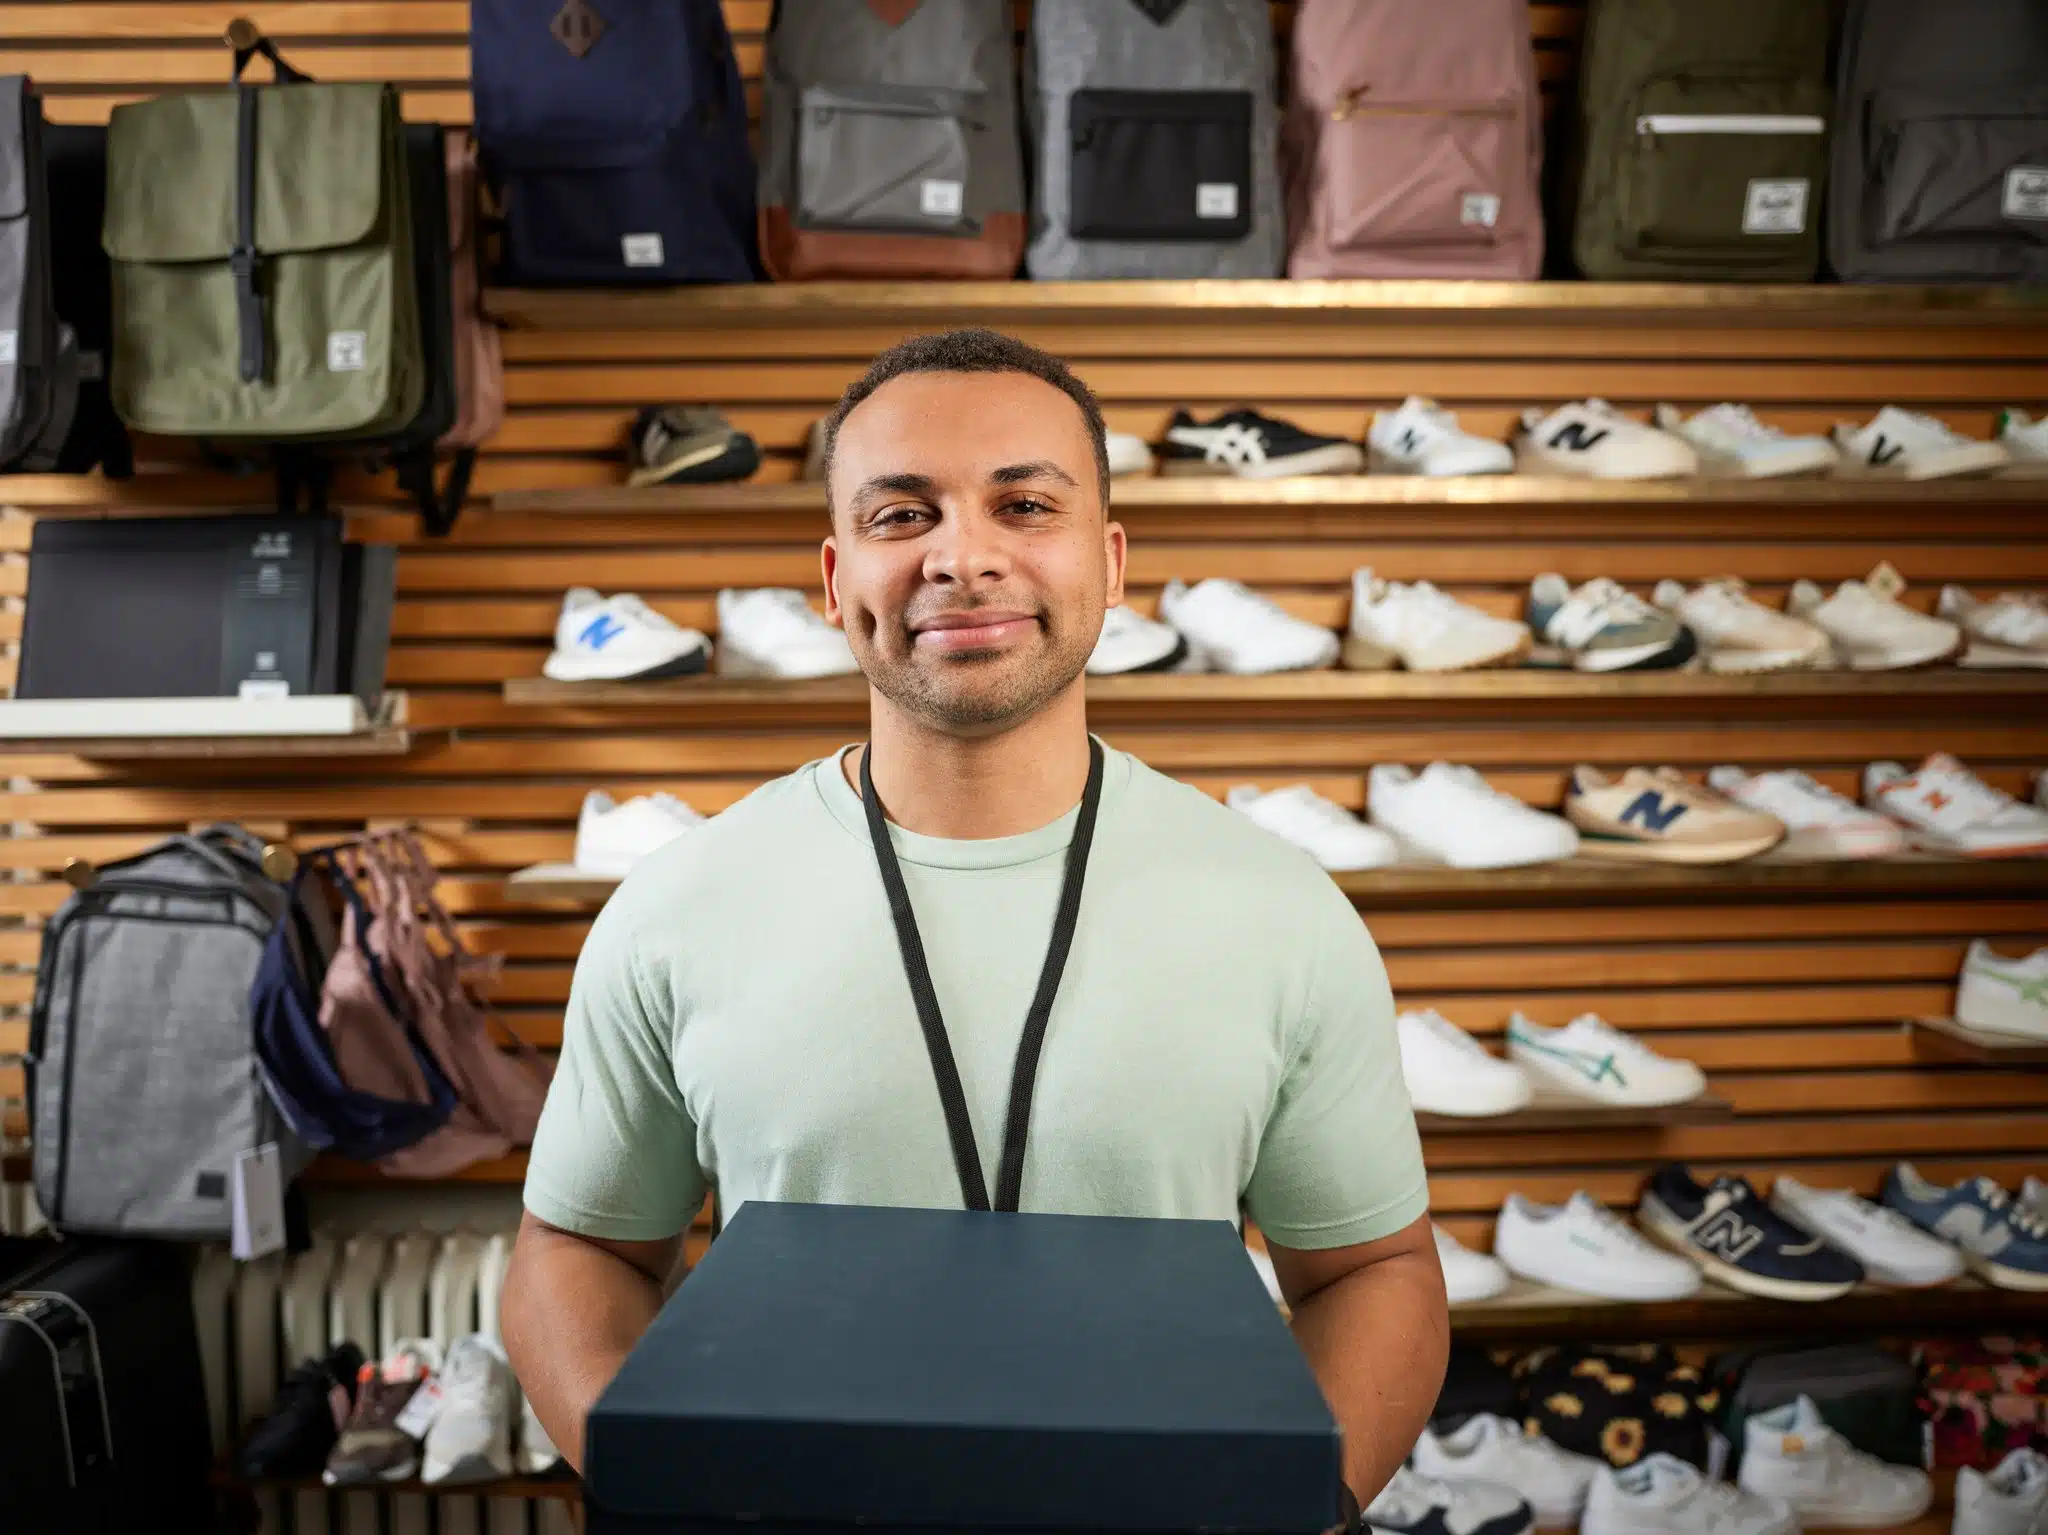 Rebranding image showcasing employee in shoe section of retail store.